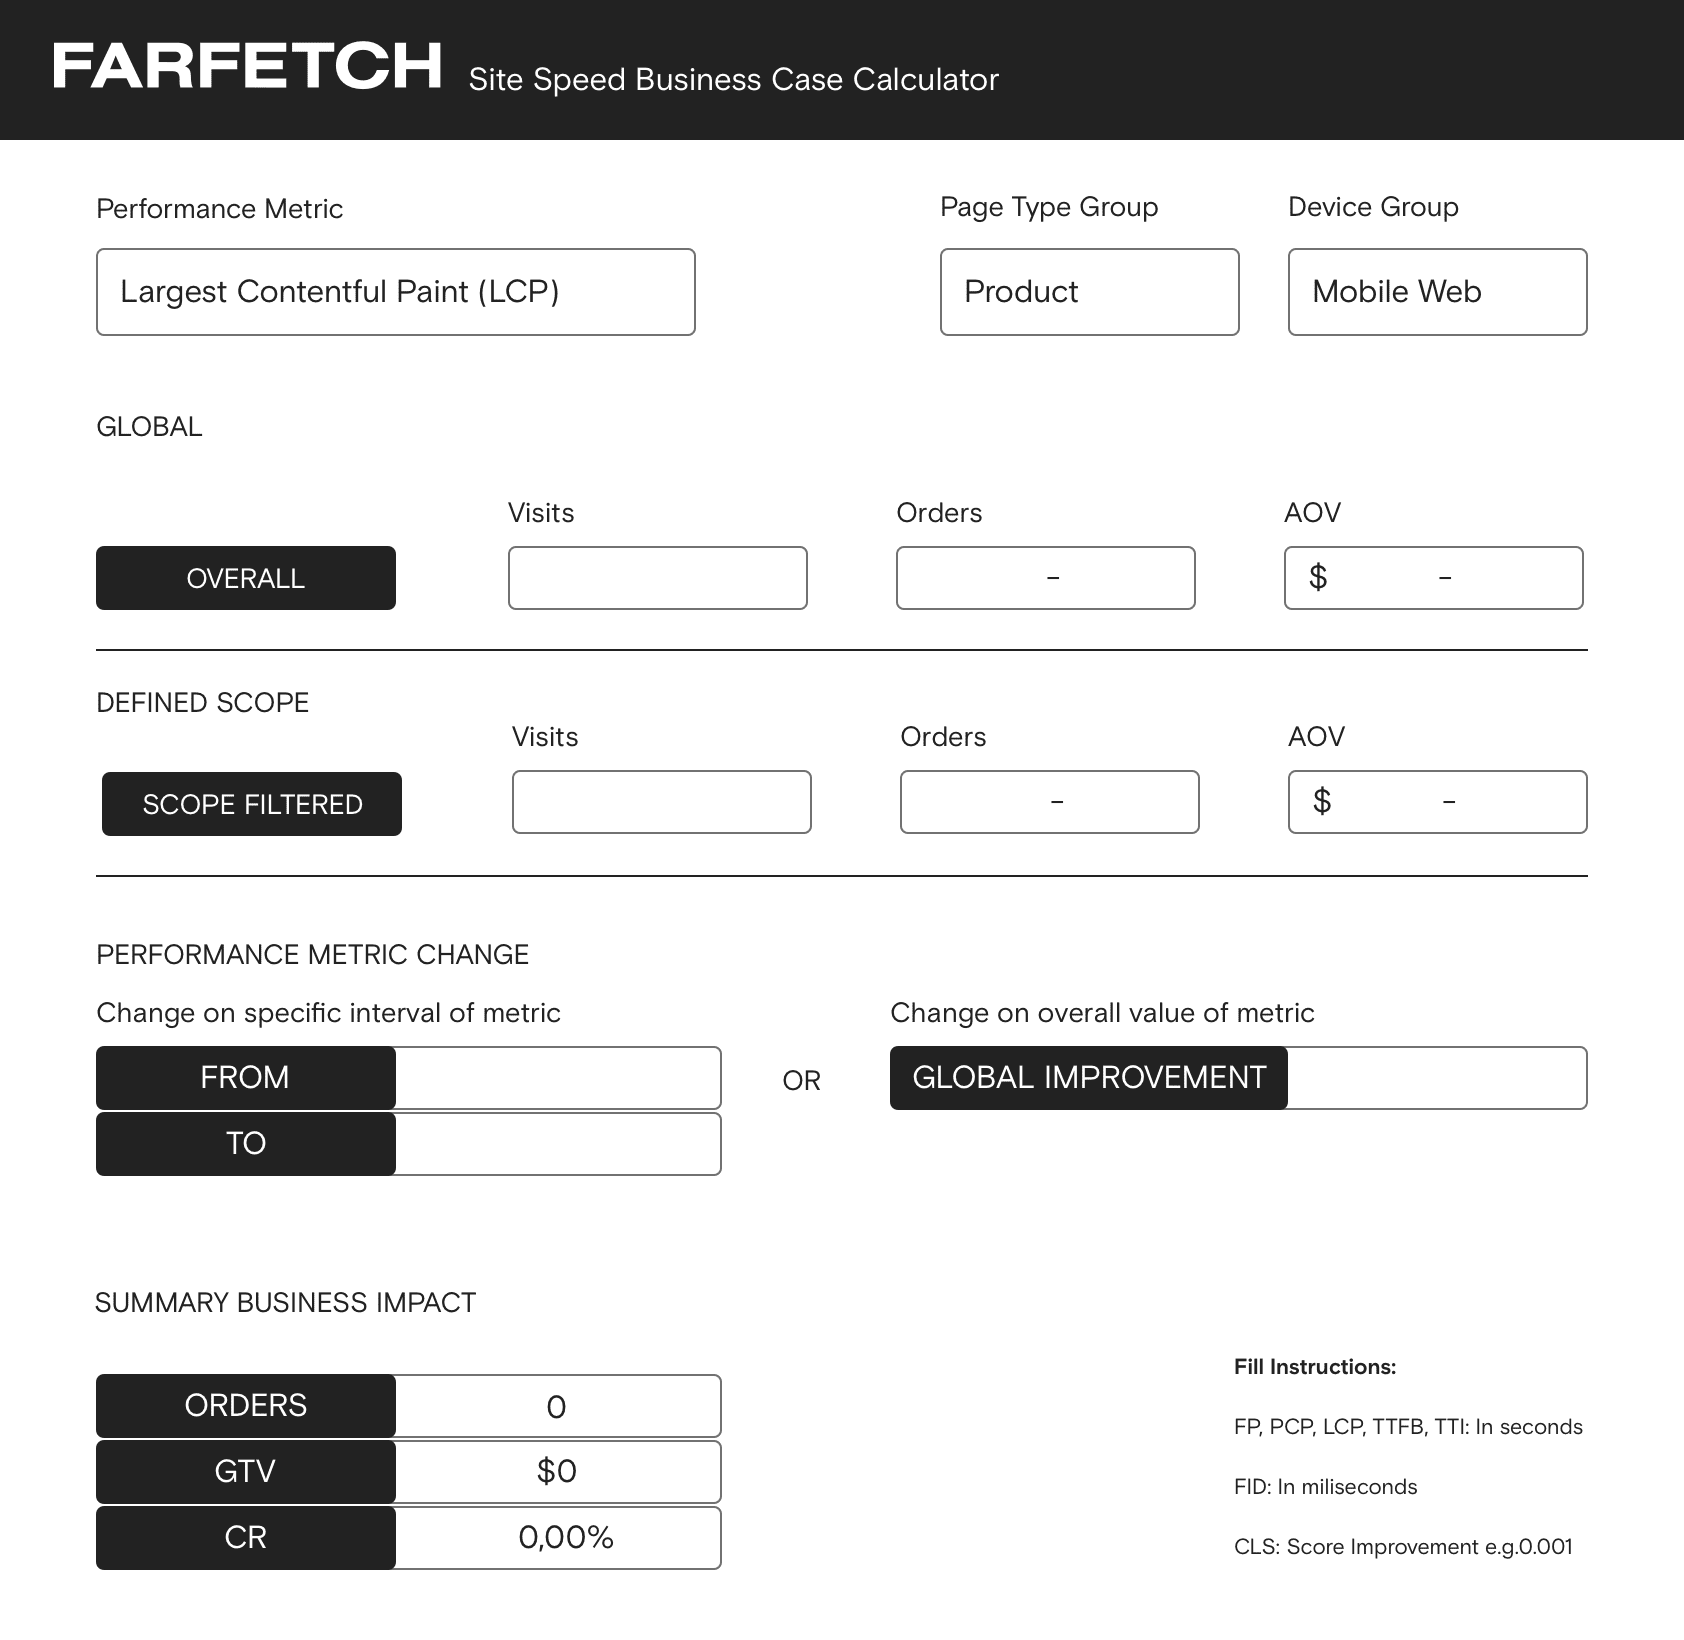 Screenshot Kalkulator Kasus Bisnis Kecepatan Situs Farfetch.